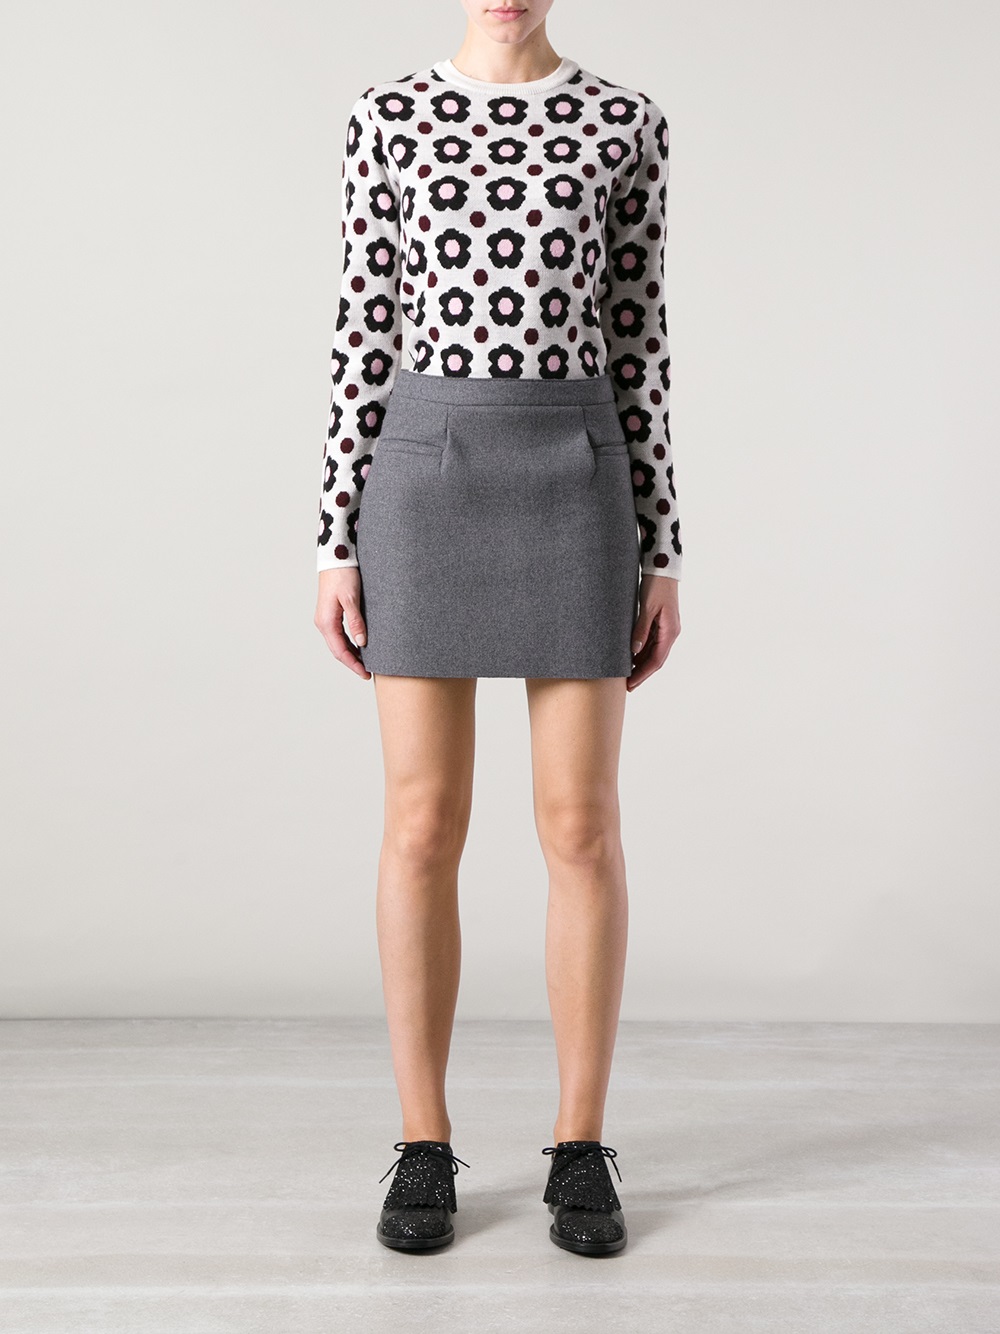 Lyst - J.w.anderson Wool Aline Mini Skirt in Gray